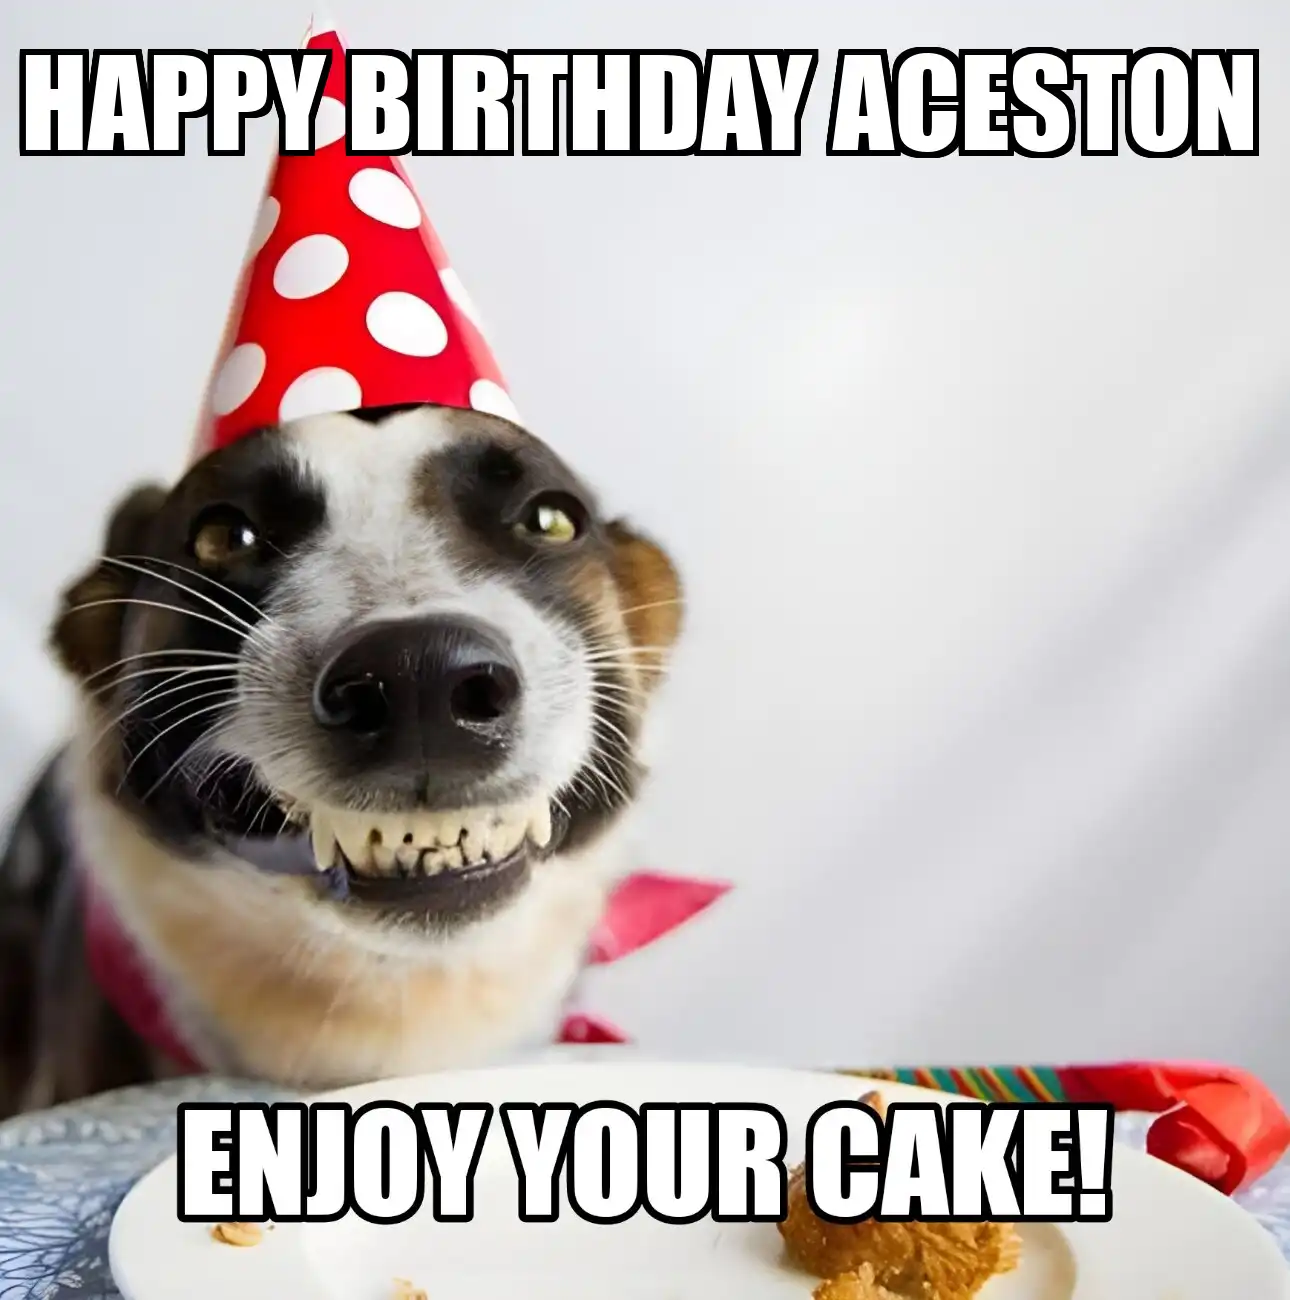 Happy Birthday Aceston Enjoy Your Cake Dog Meme